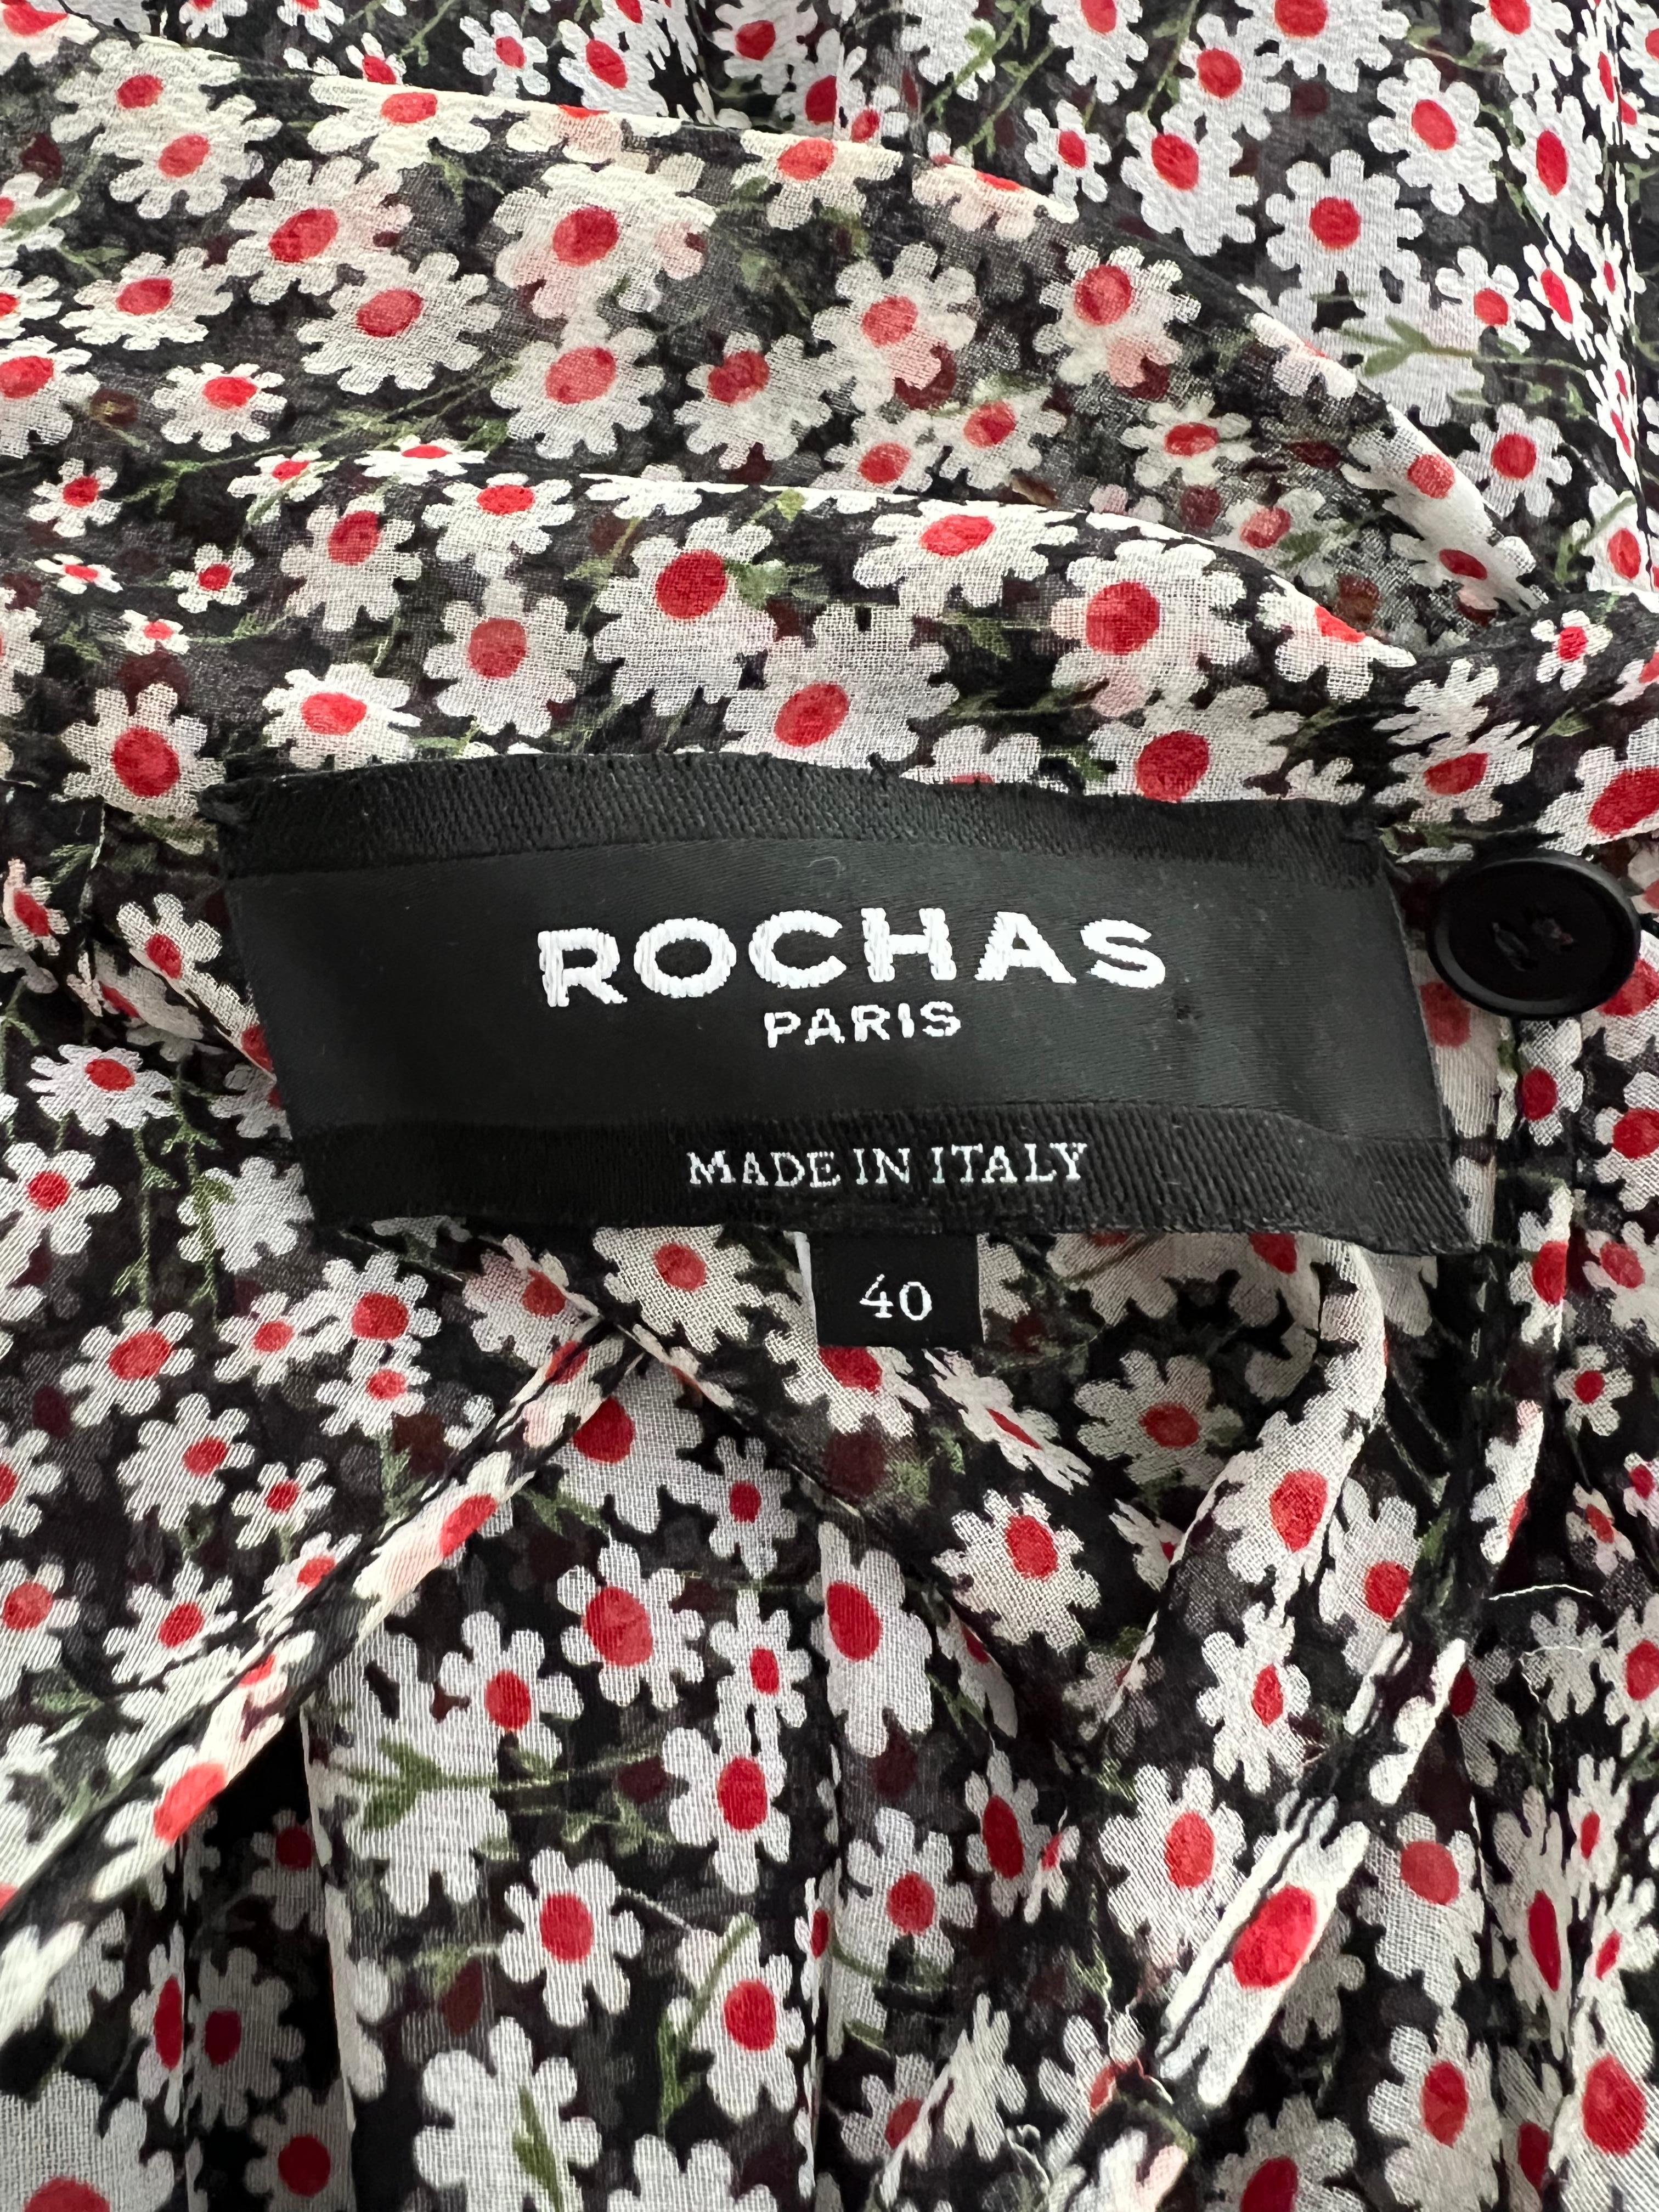 Rochas Paris Silk Midi Dress, Size 40 For Sale 5